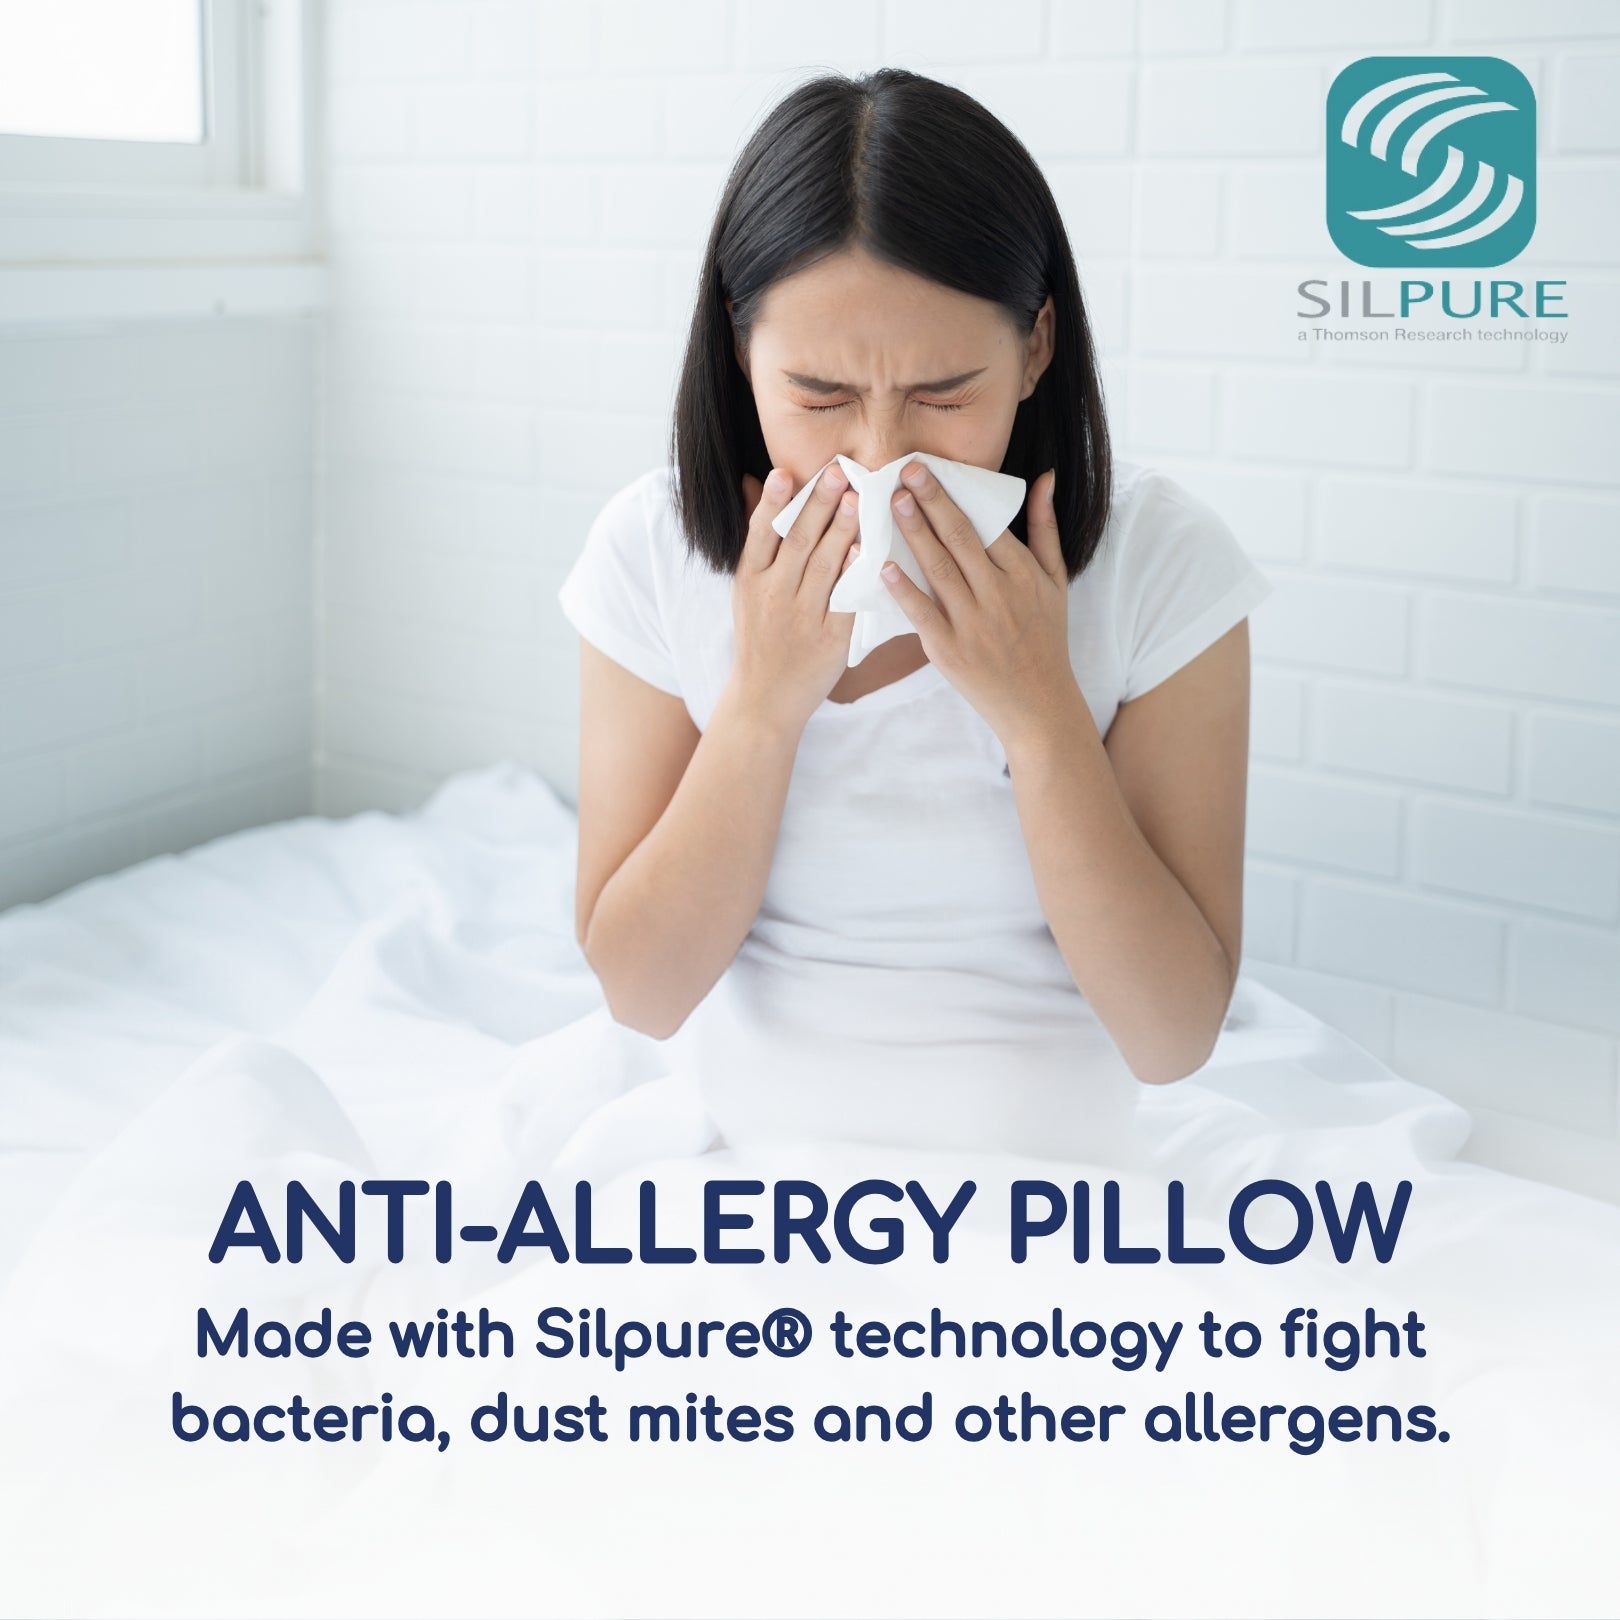 Head2Sleep Anti-Allergy Pillow